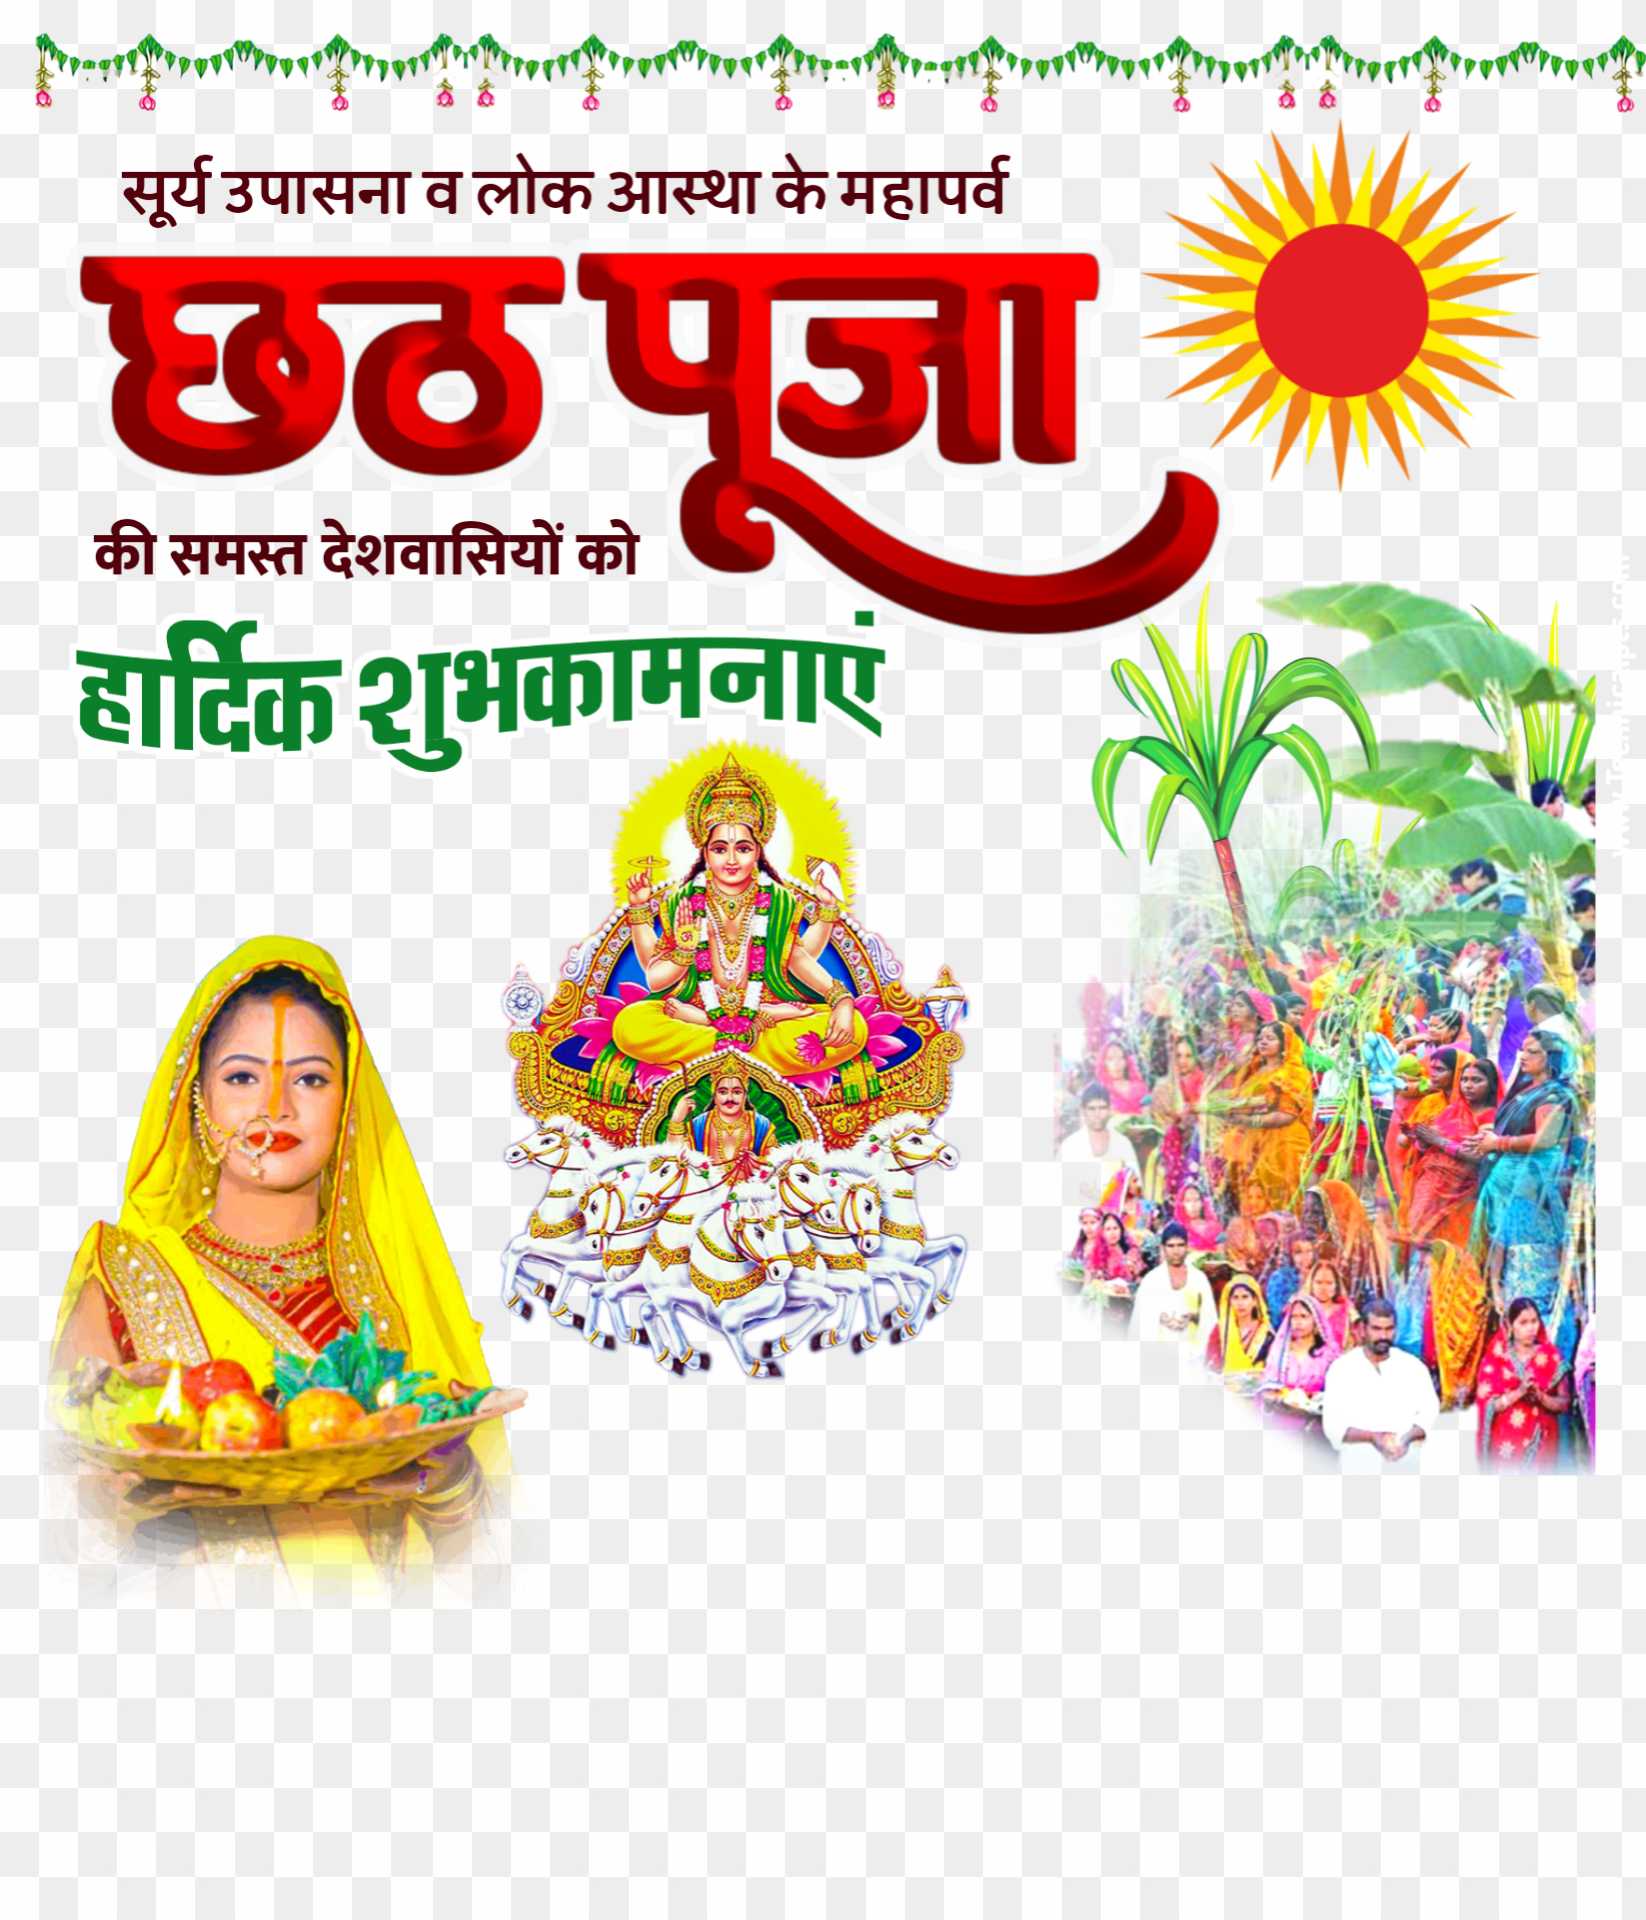 Chhath Puja ki hardik shubhkamnaen banner editing PNG images download